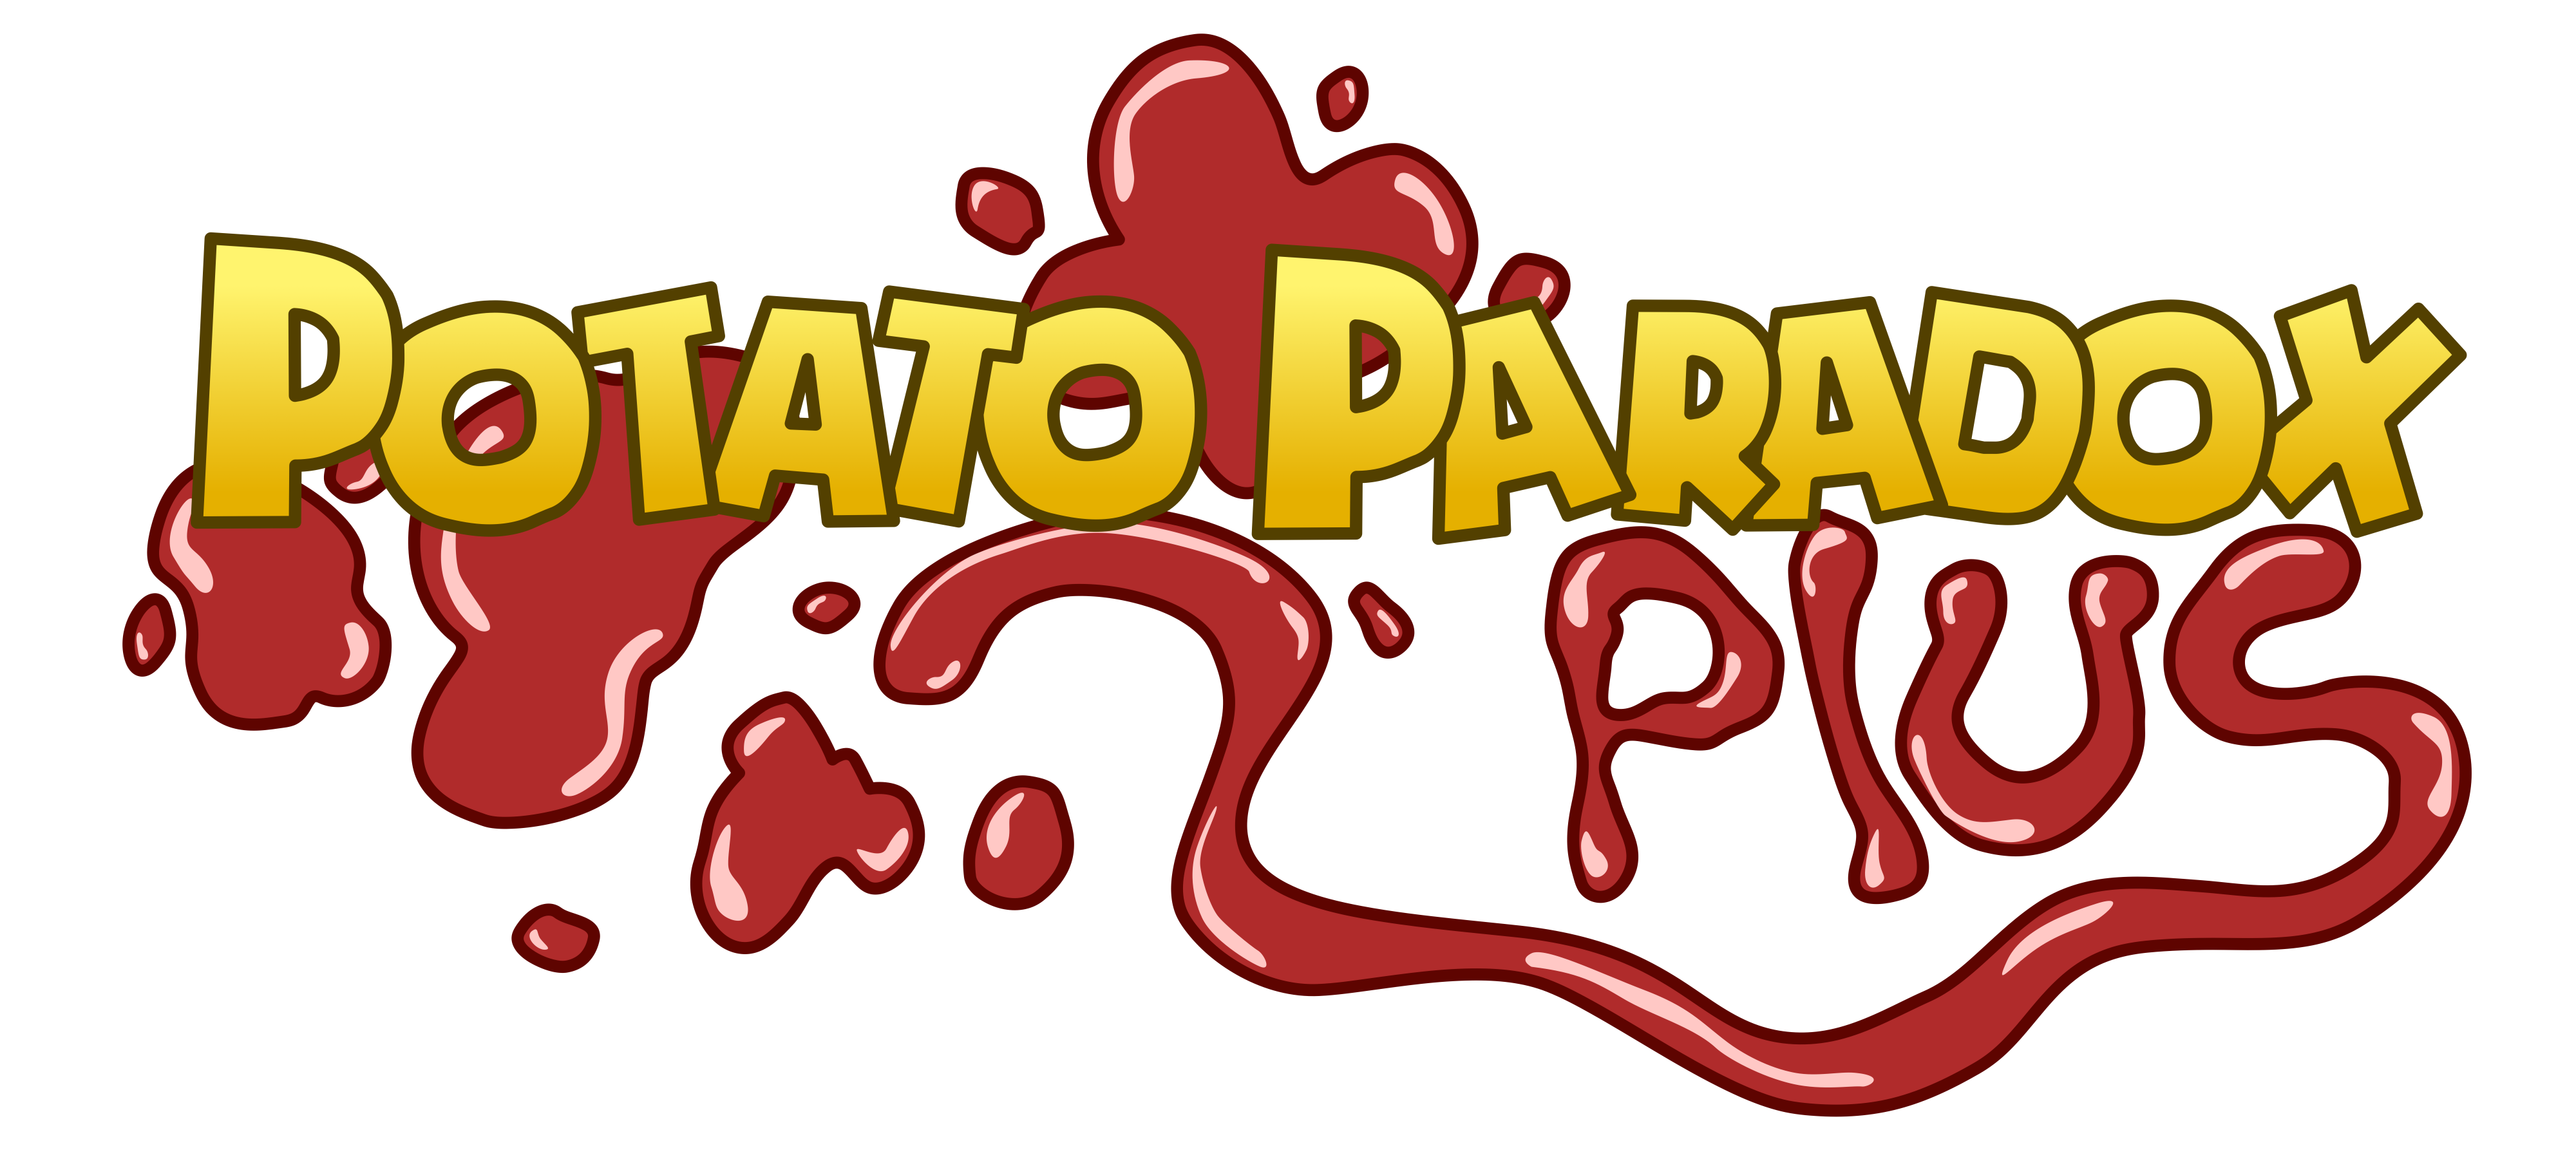 Potato Paradox Plus Demo